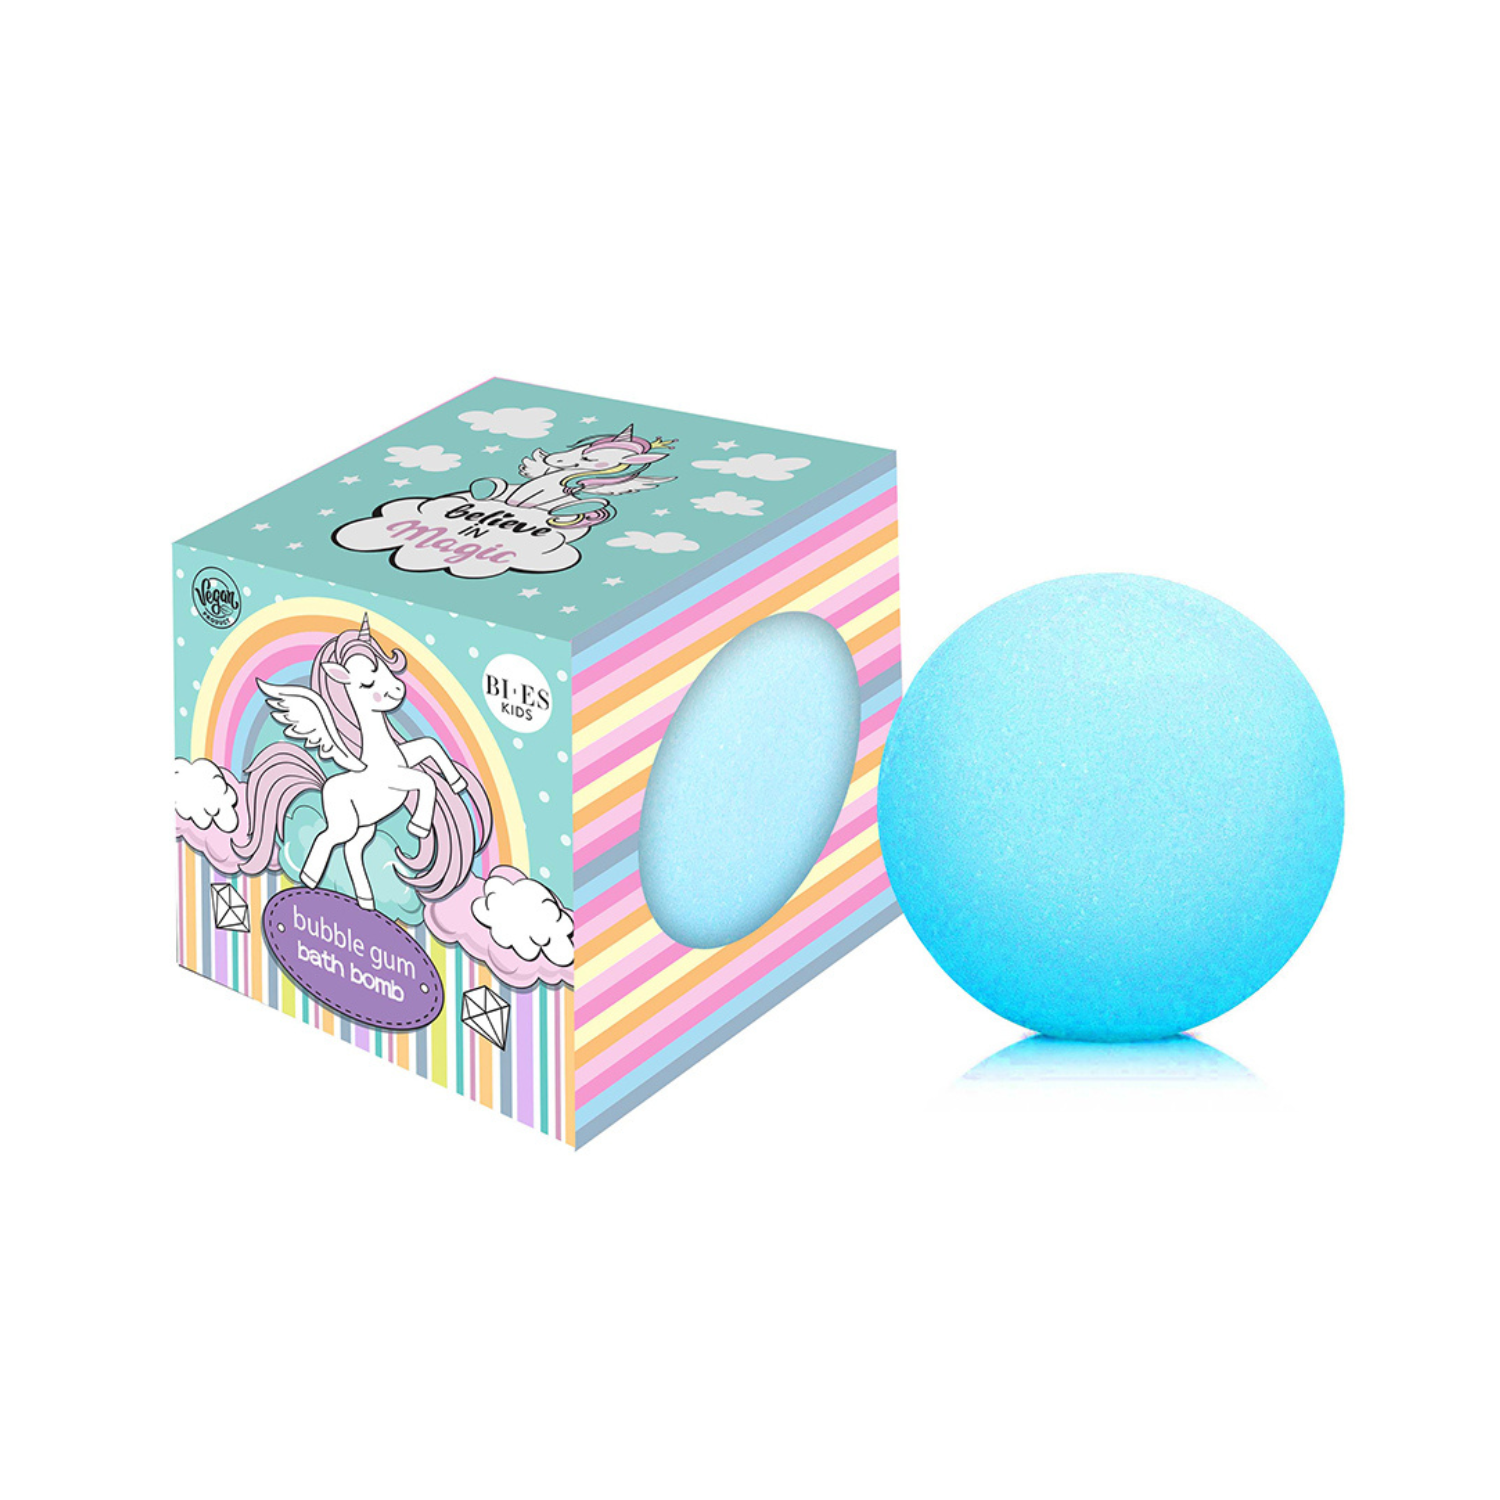 Bomba de baie Unicorn cu bubble gum